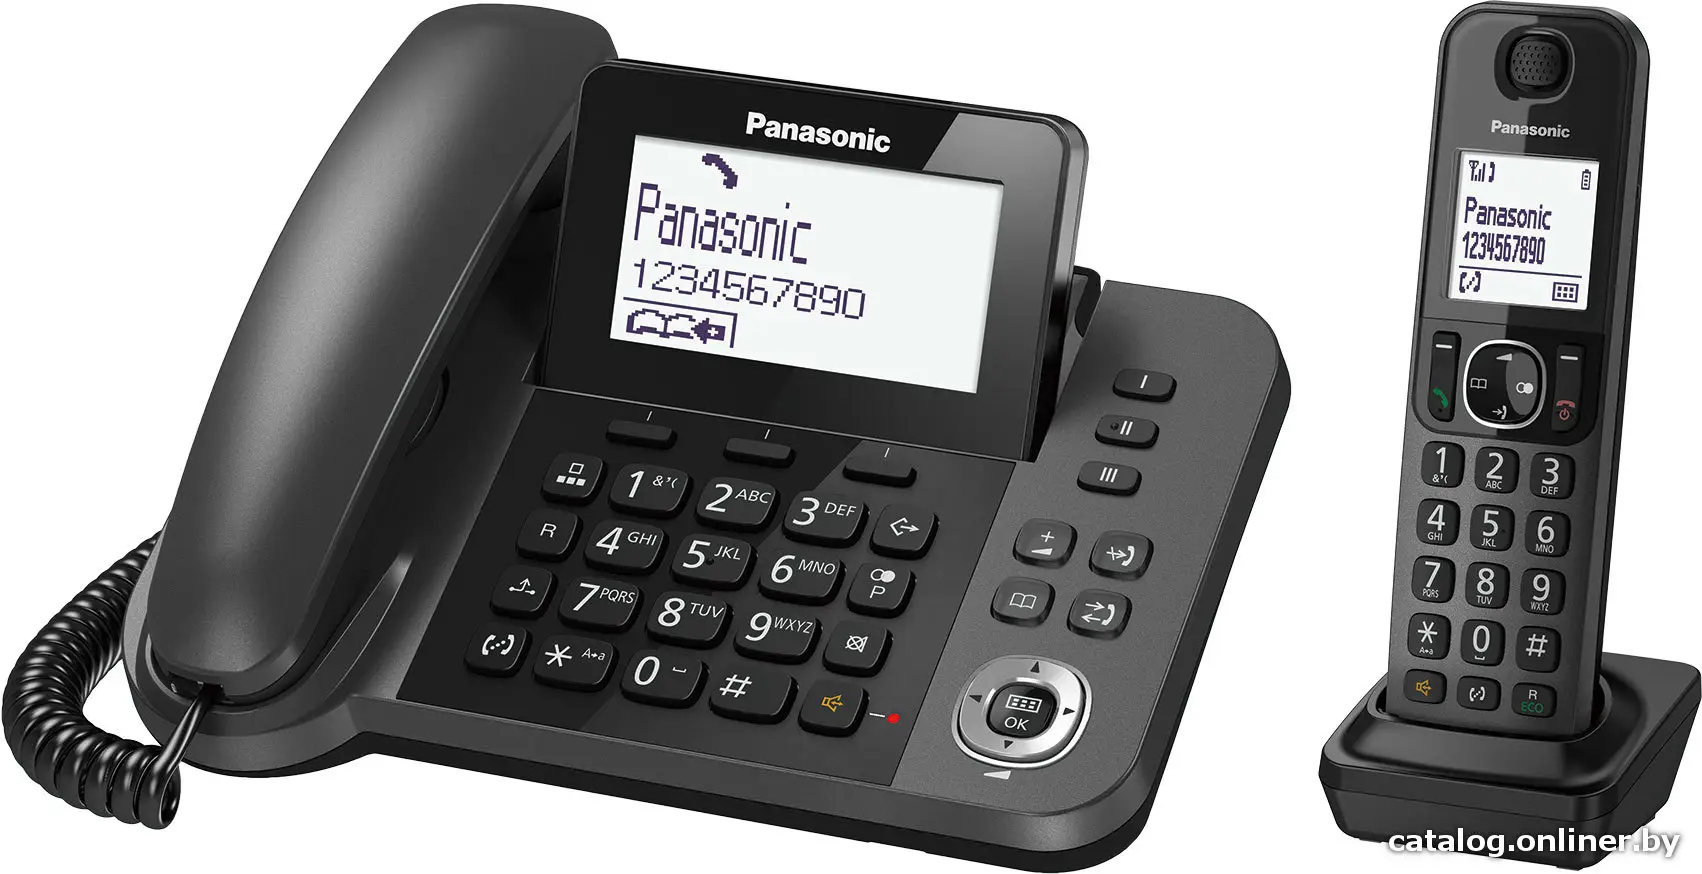 Купить Радиотелефон Panasonic KX-TGF310RUM, цена, опт и розница